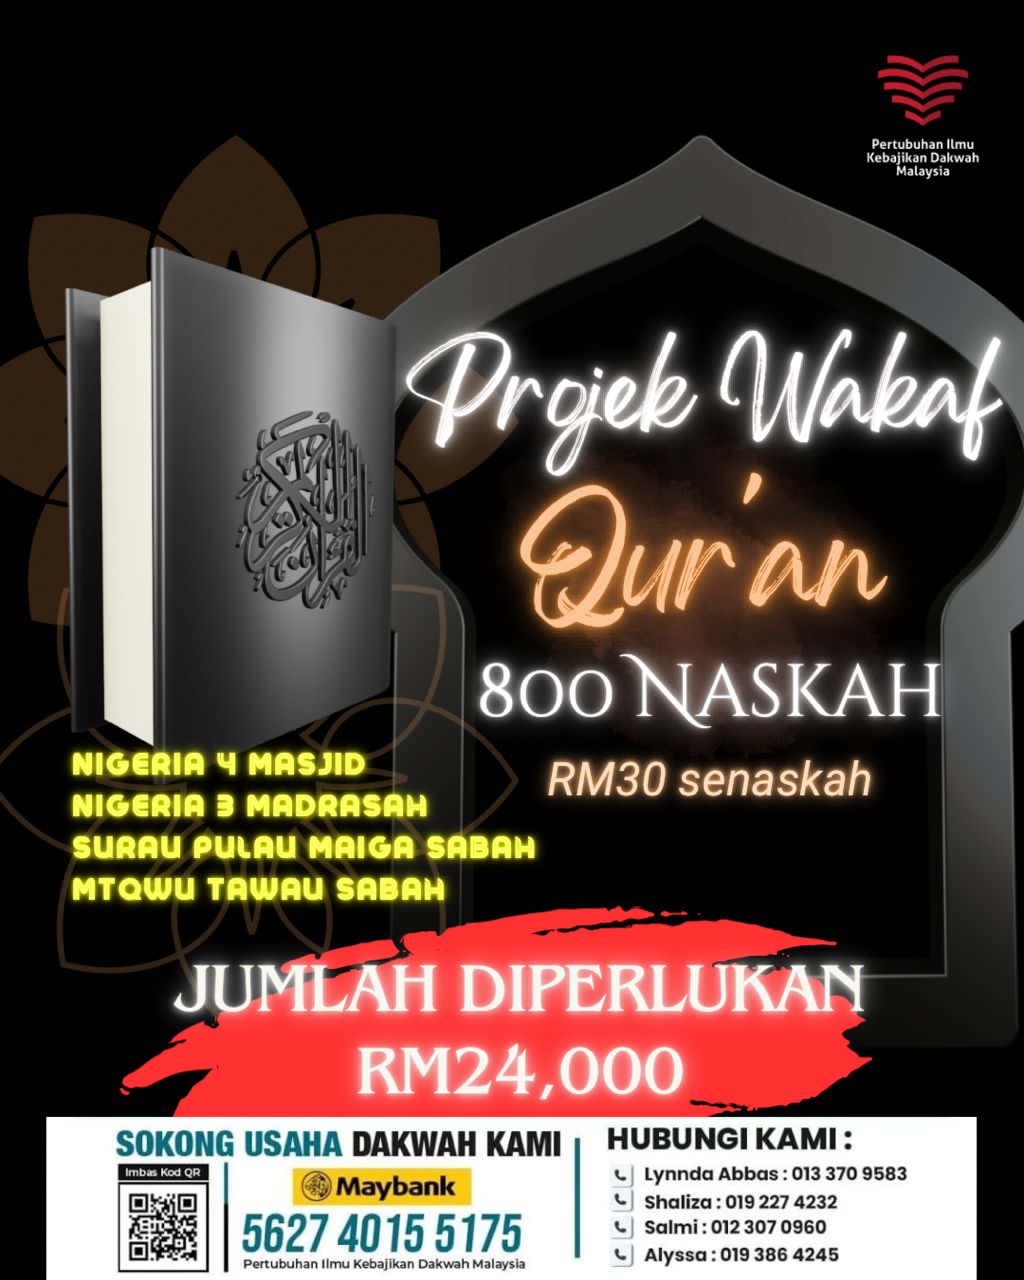 Projek Wakaf Quran 800 Naskah